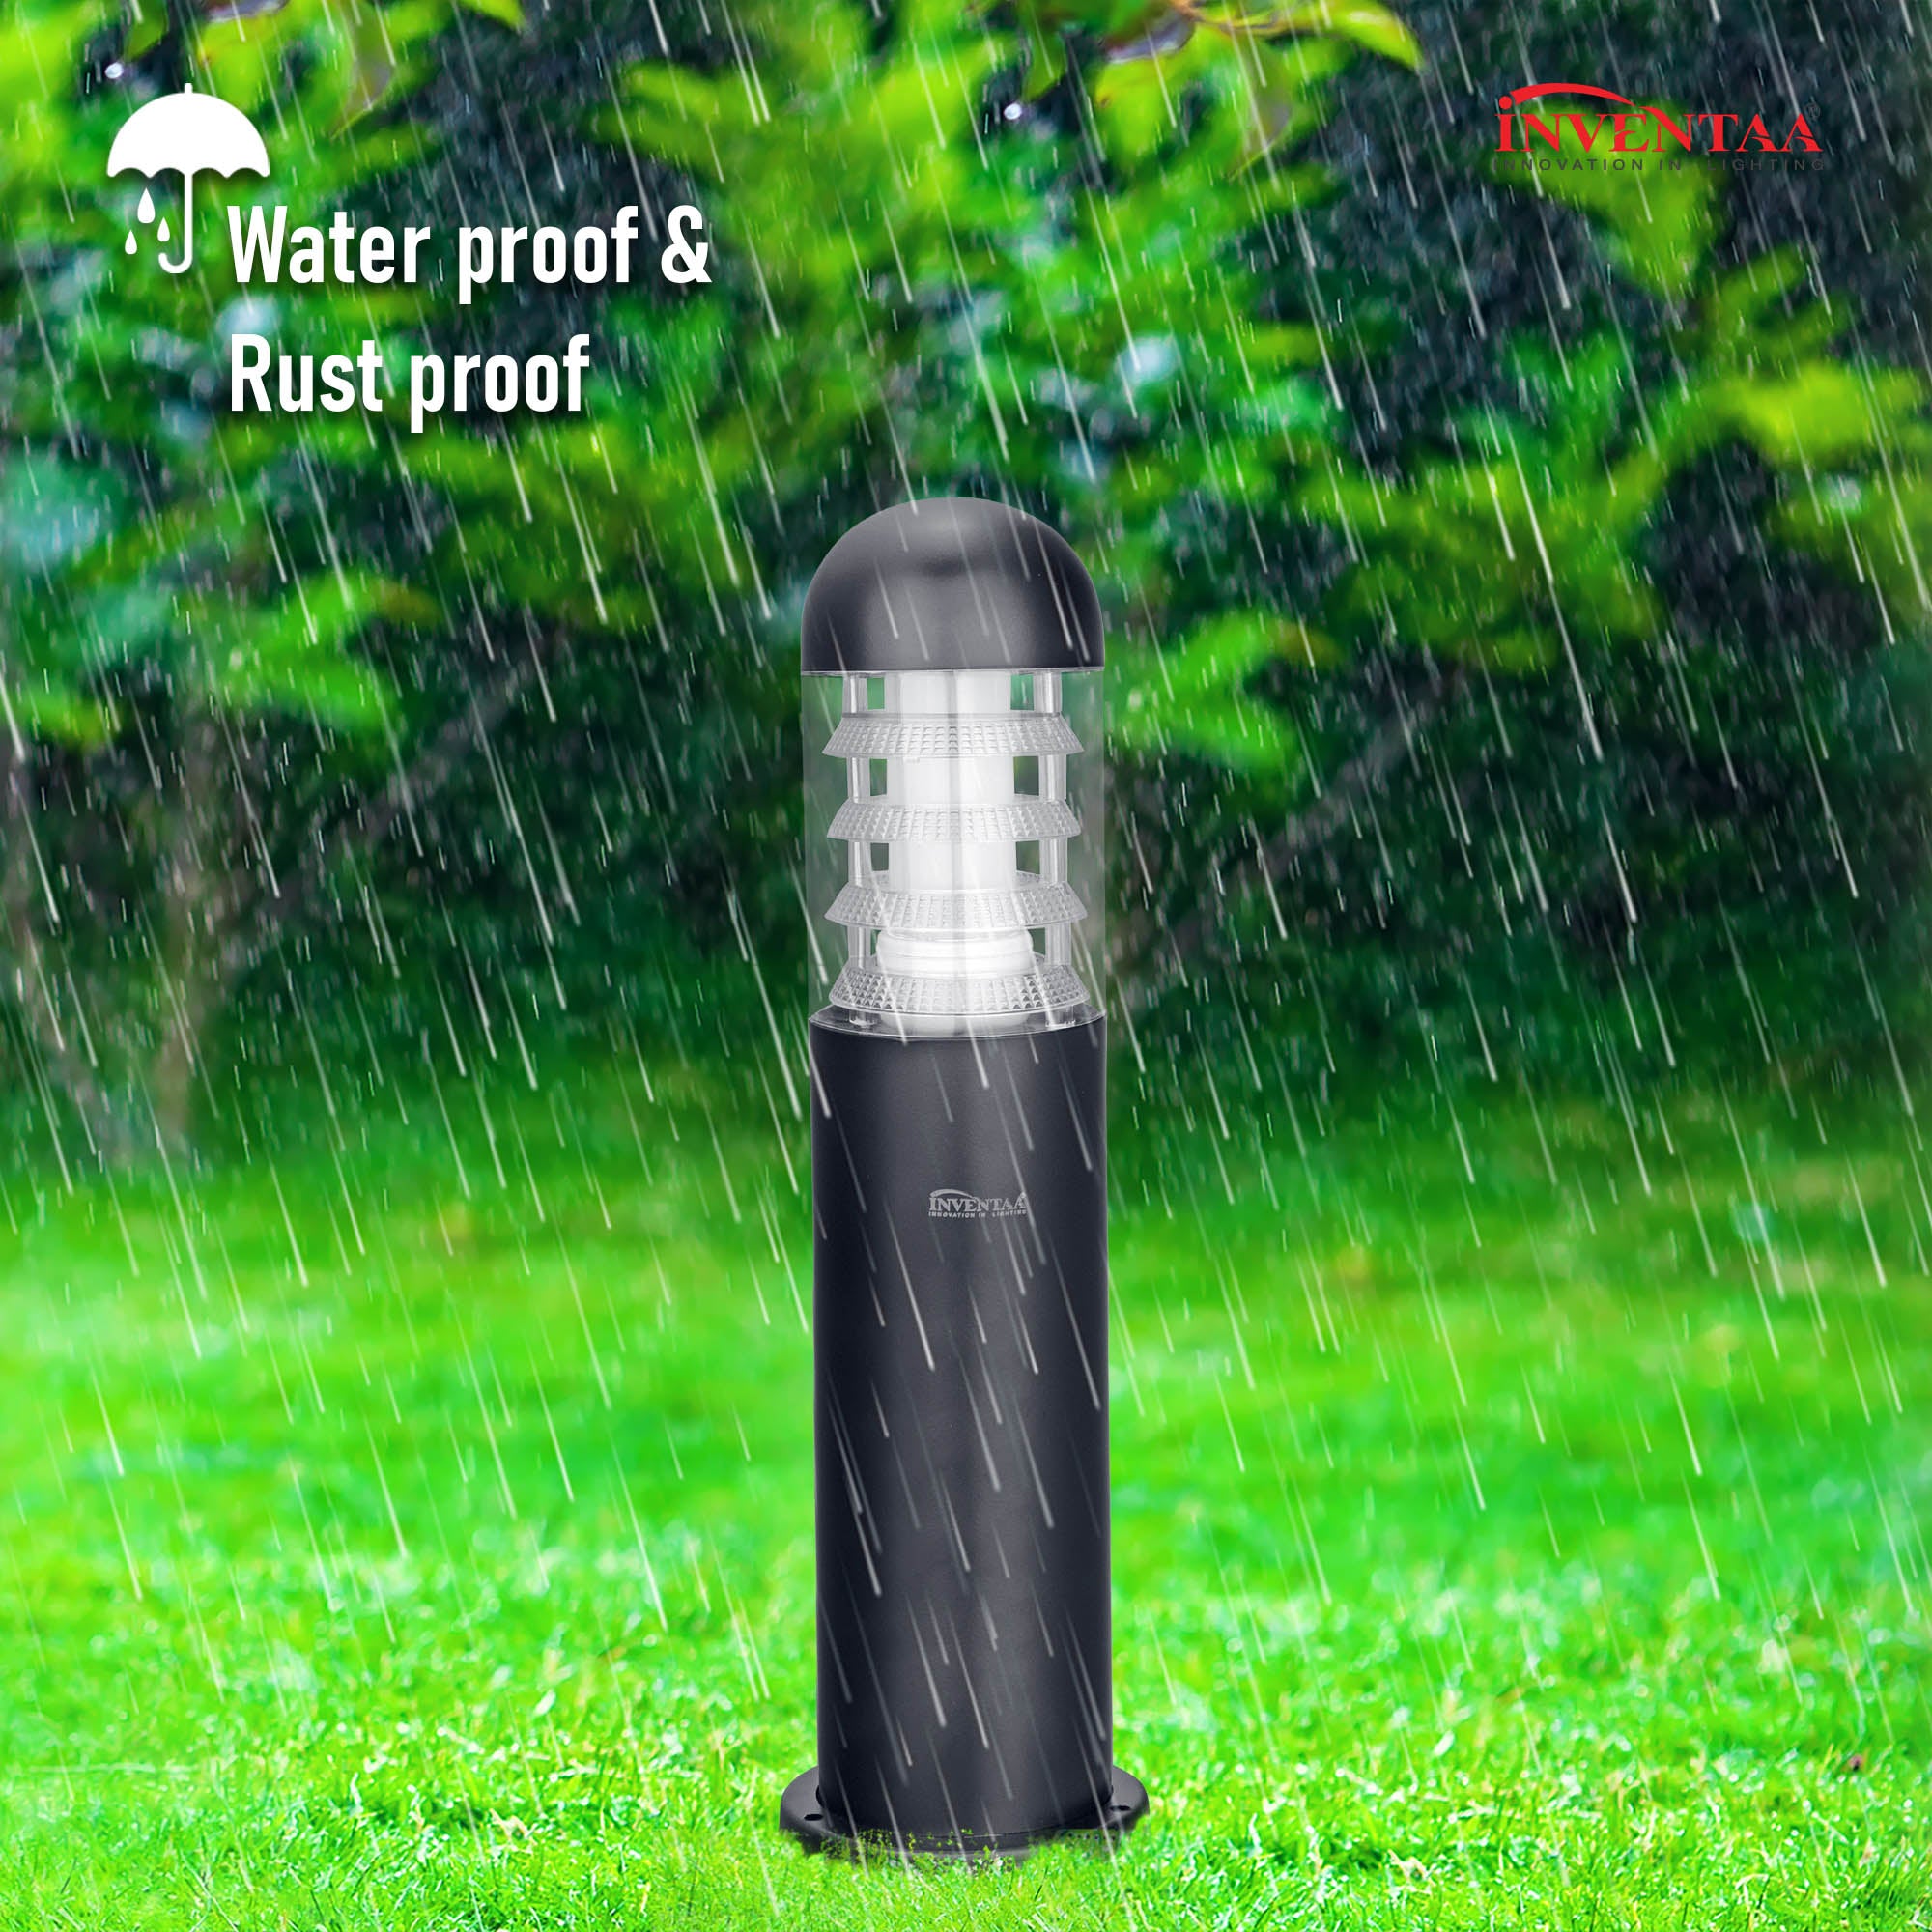 Electra 2 feet led garden bollard light featuring its waterproof resistance for outdoor use #size_2 feet